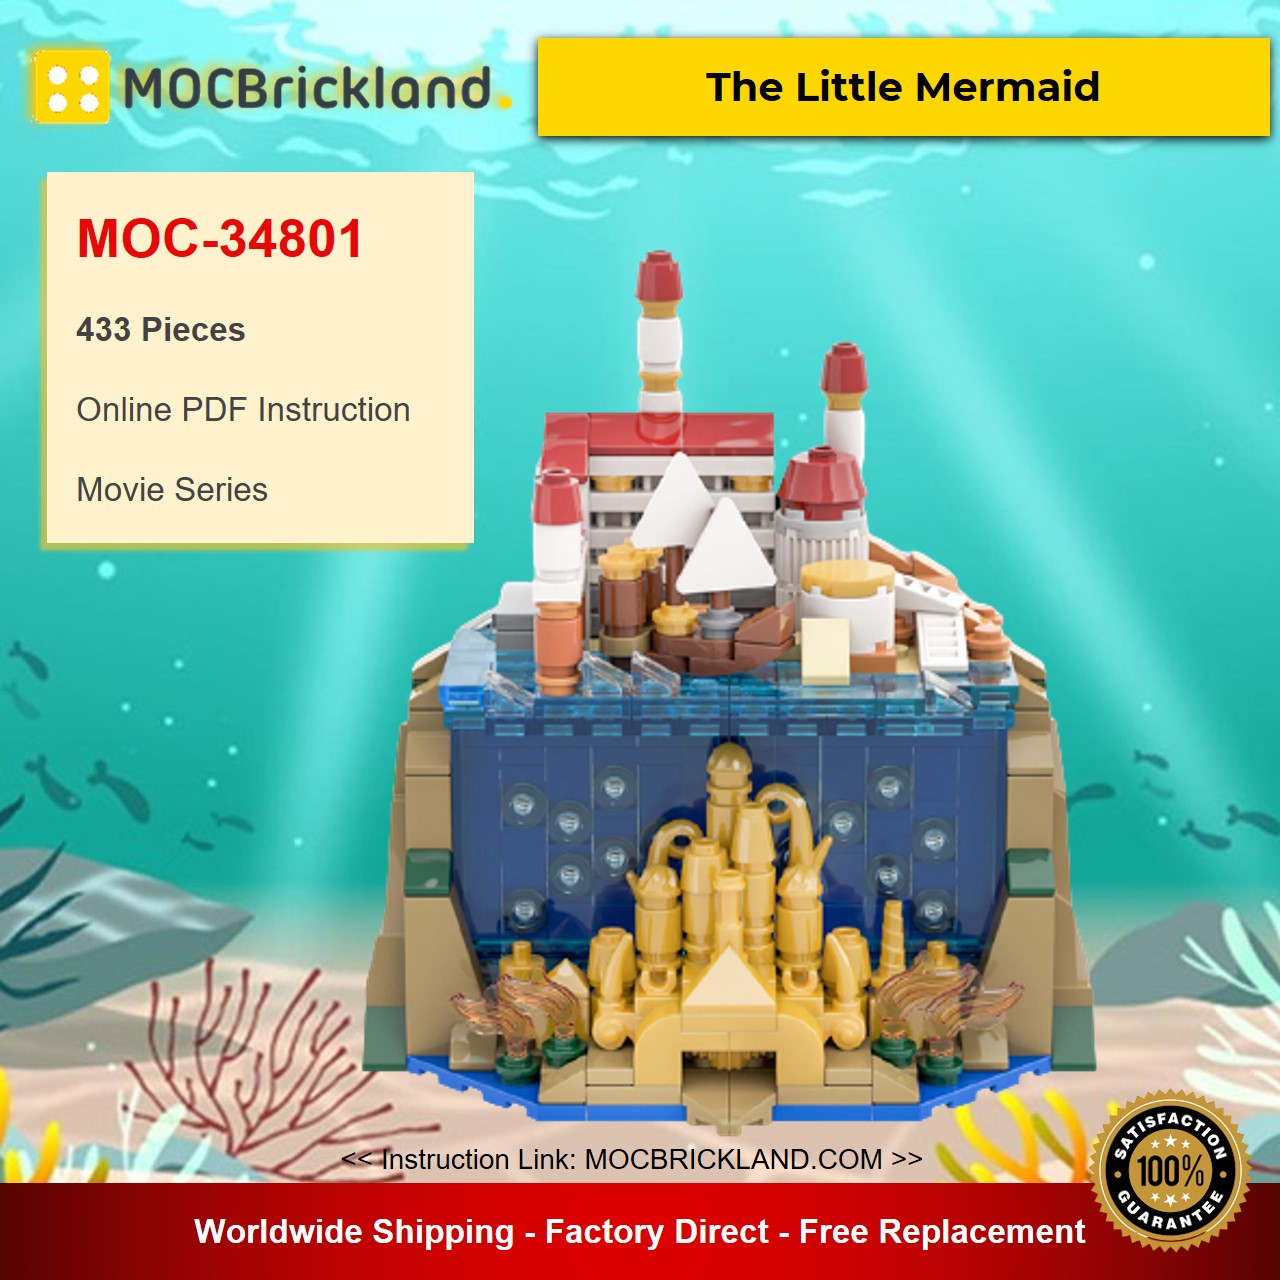 MOCBRICKLAND MOC-34801 The Little Mermaid